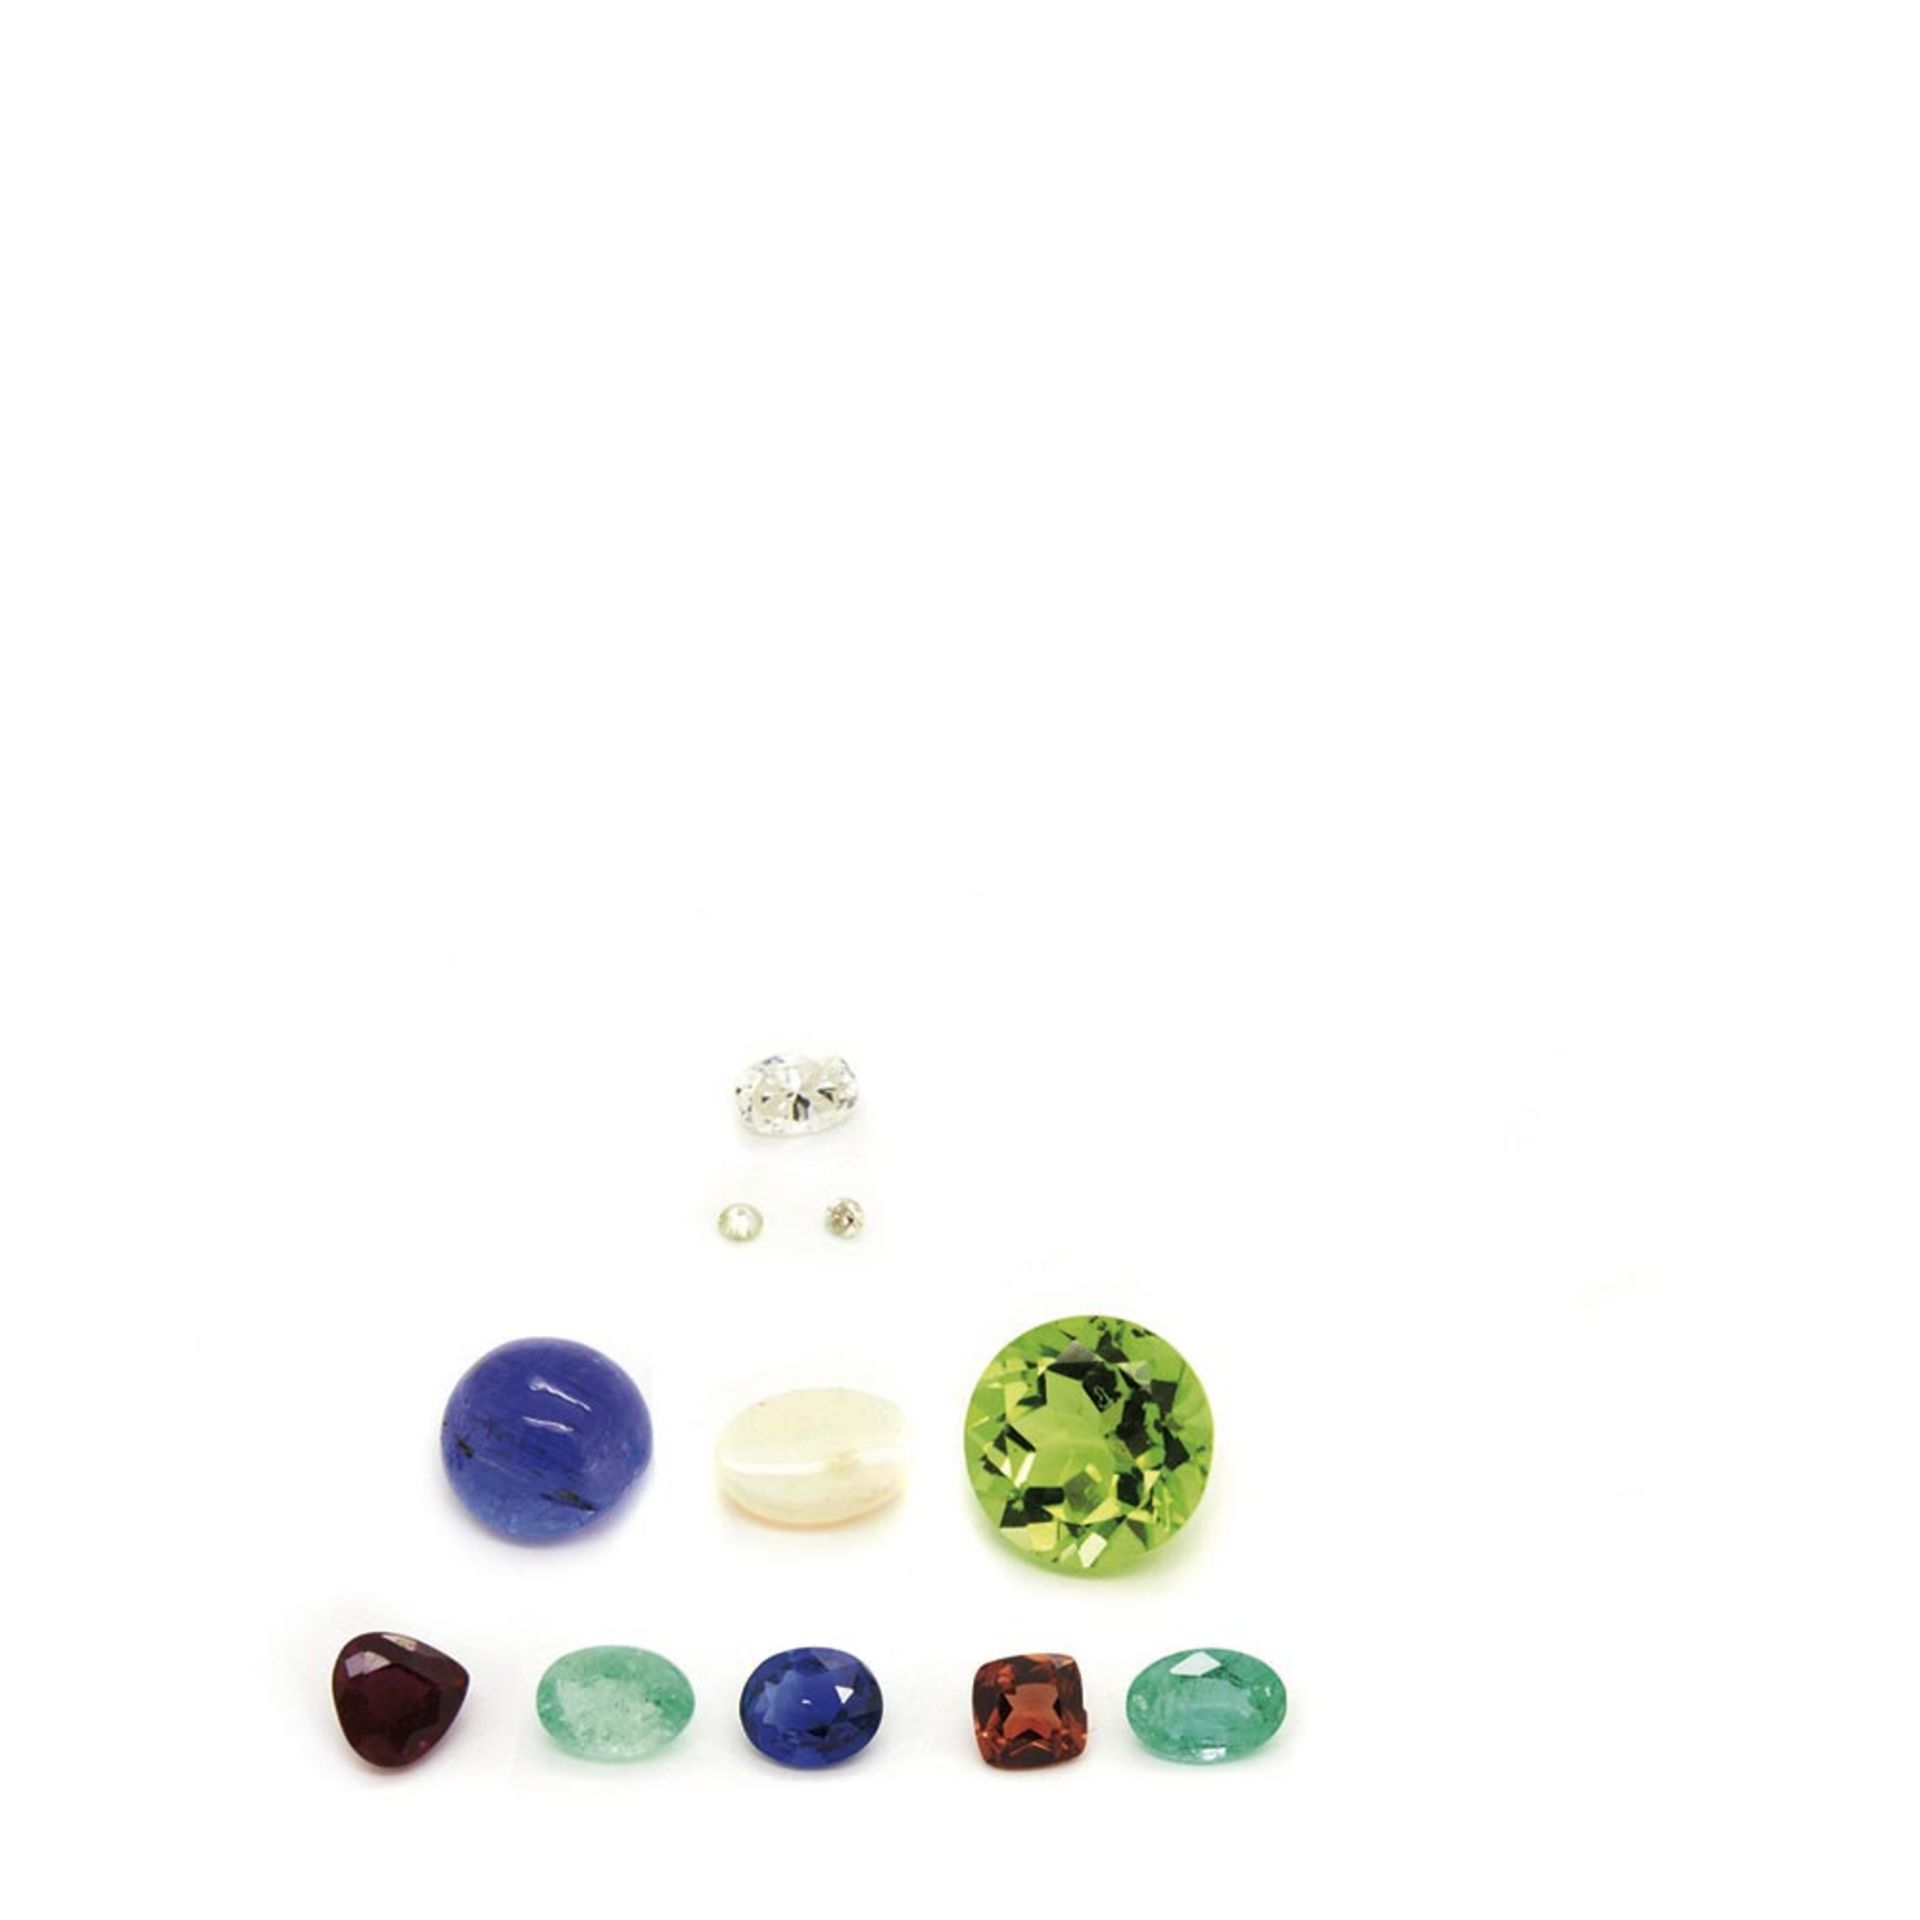 Ruby, sapphires, emerald, opal, peridots, garnets, rodalites, tanzanites and diamonds Lote compuesto